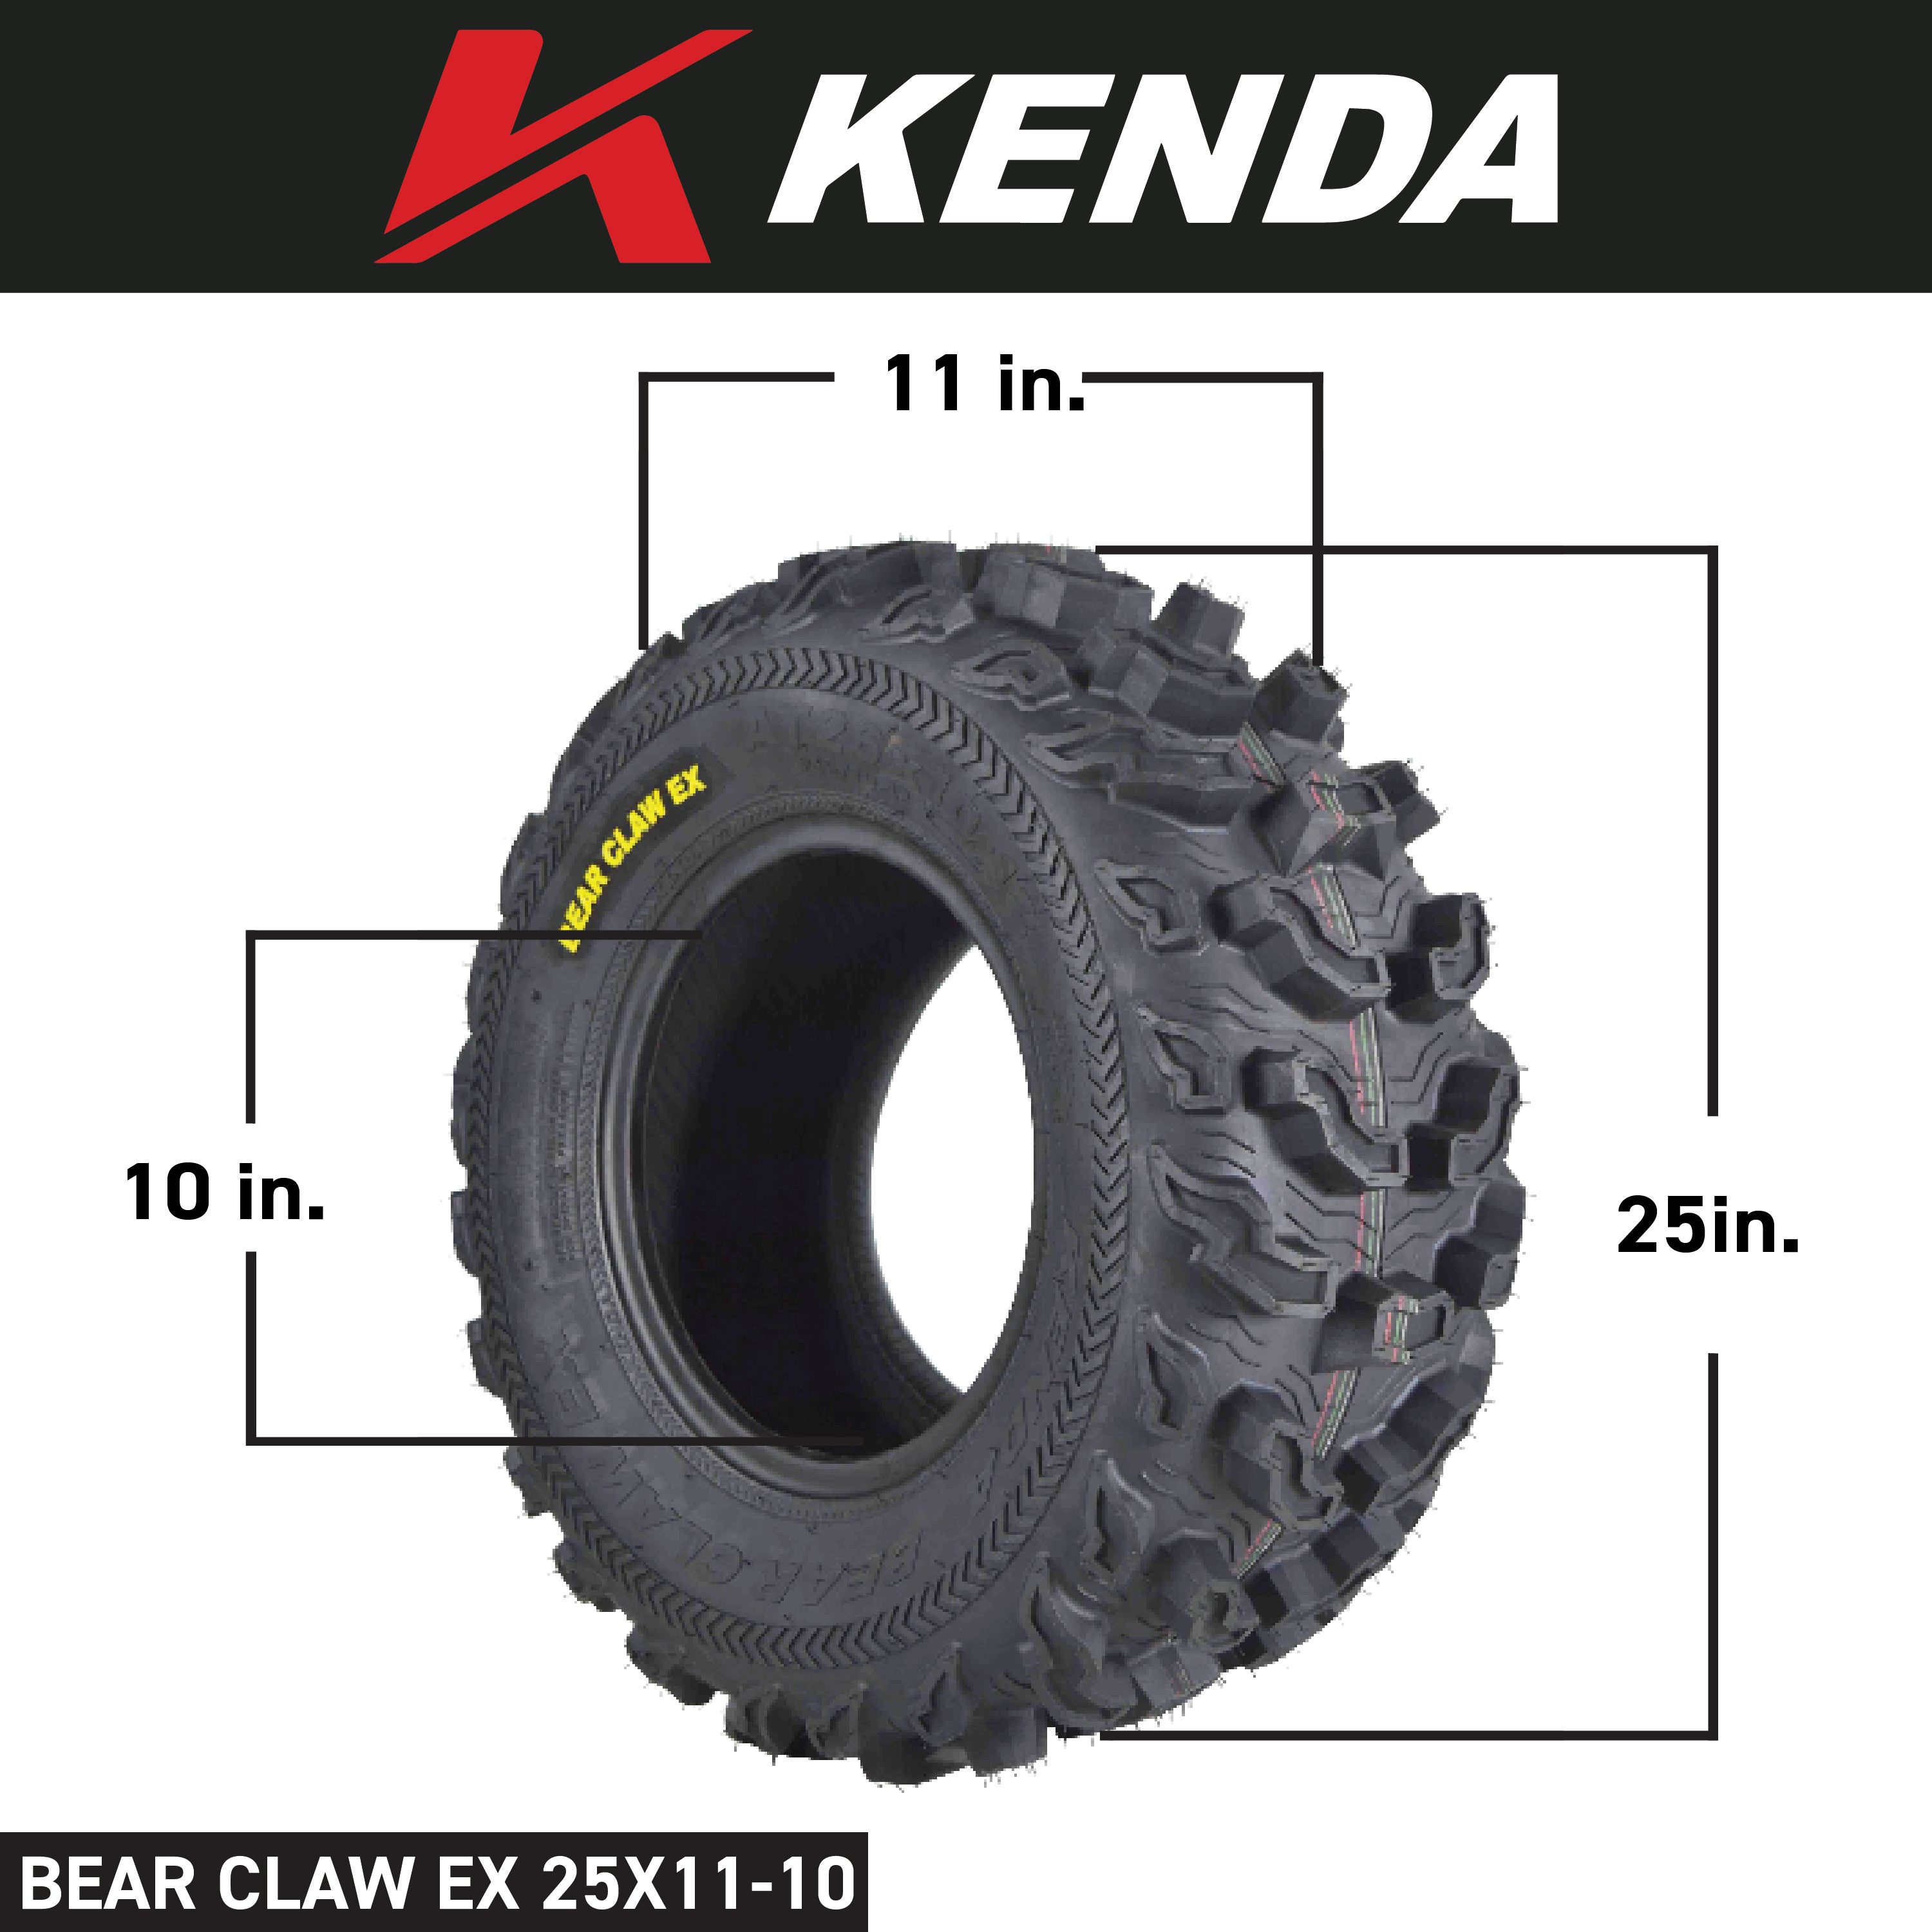 Kenda Bear Claw EX 25x11-10 Rear ATV 6 PLY Tires Bearclaw 25x11x10 - 2 Pack